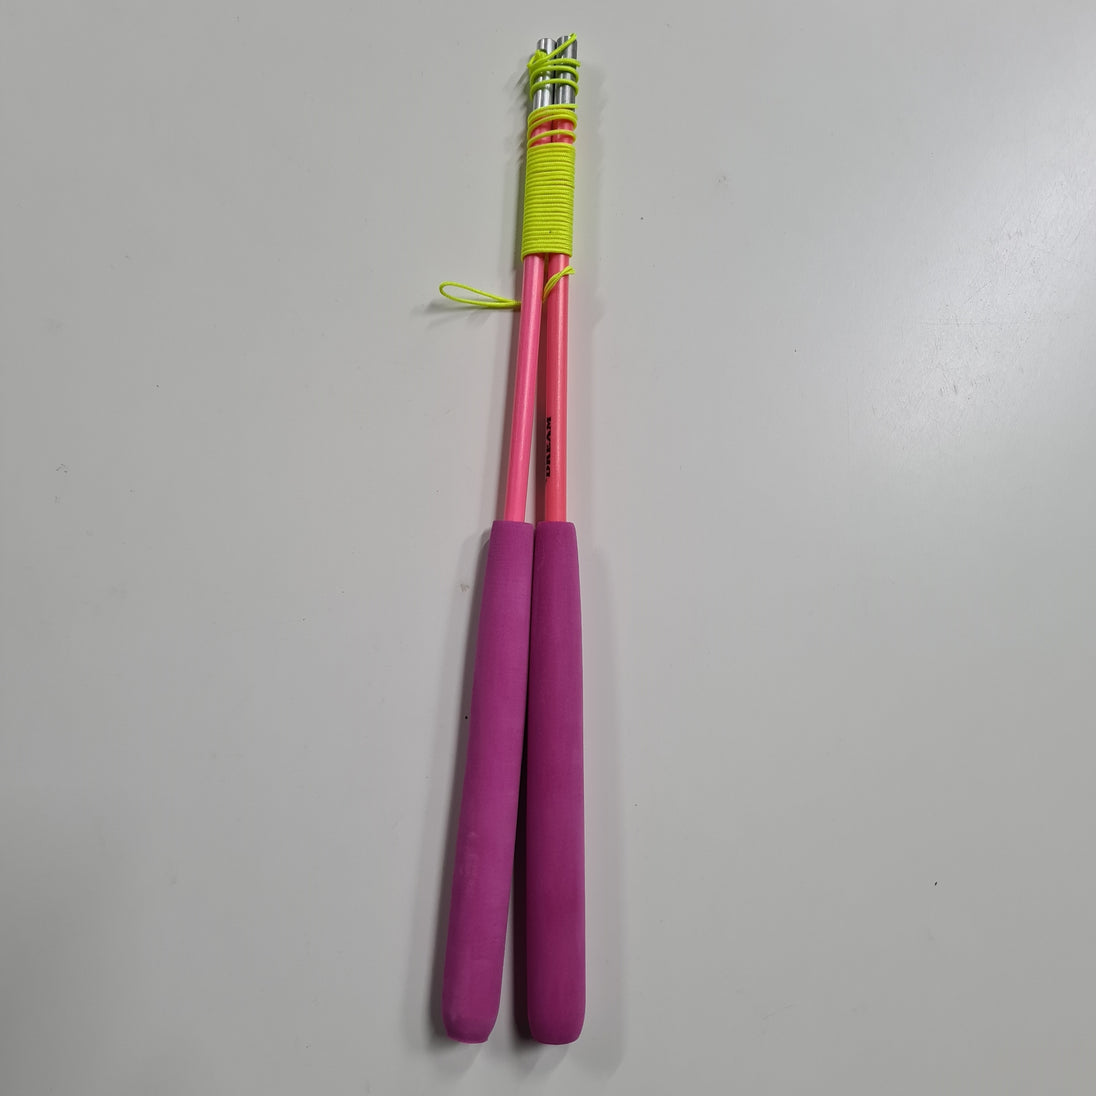 Juggle Dream Superglass Pink Diabolo Handsticks - Bargain basement - RRP £7.99